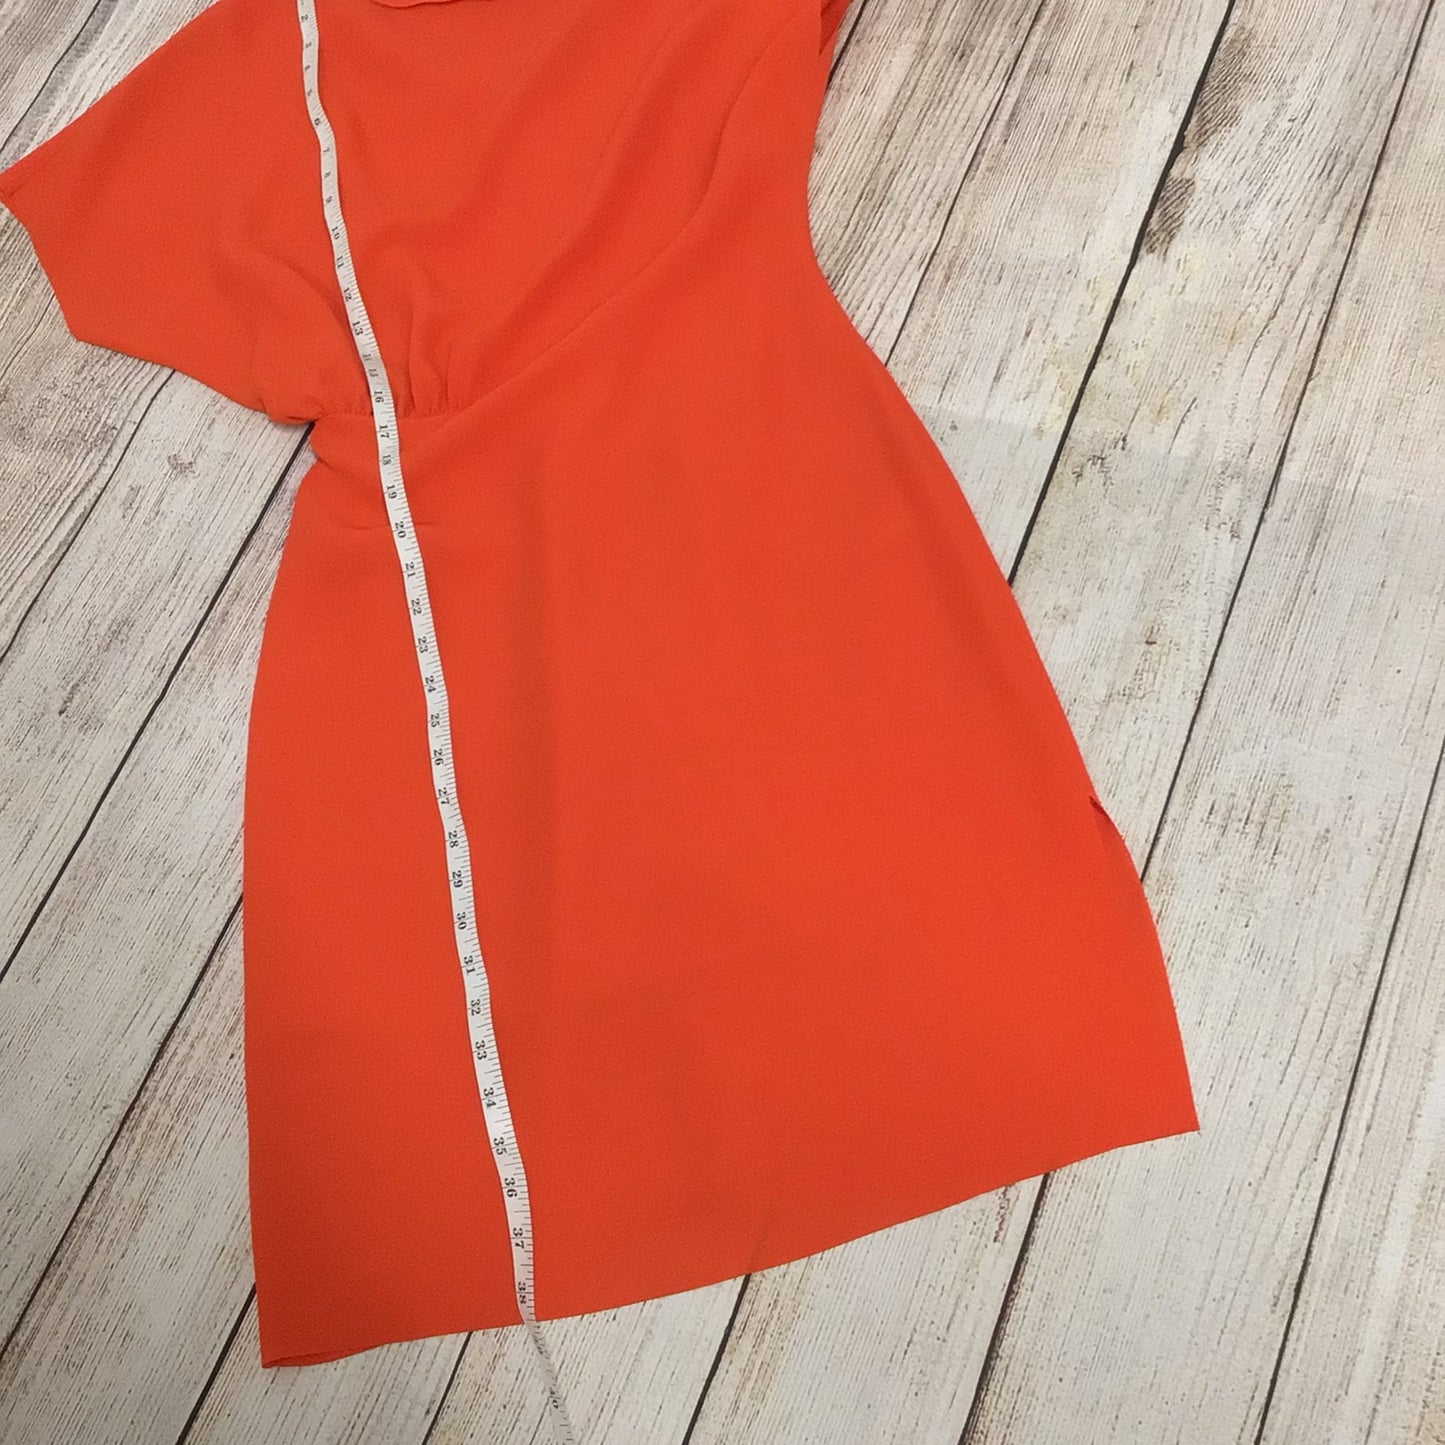 Reiss Orange Asymmetric Dress Size 8